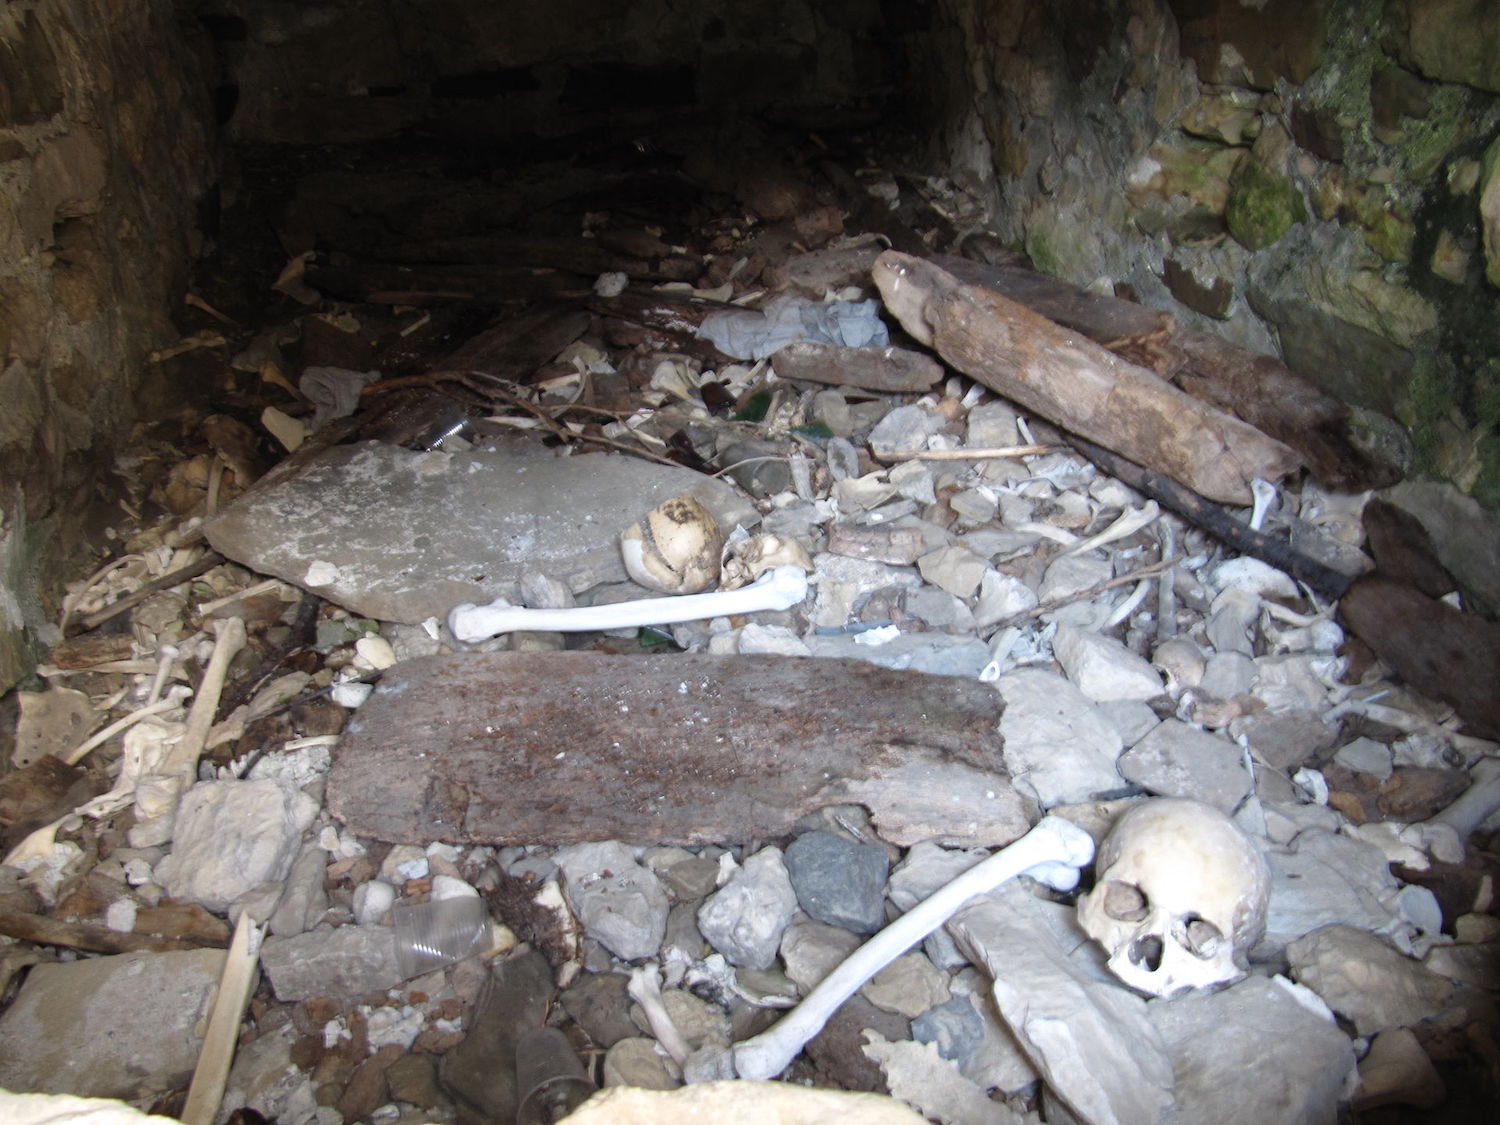 Bones inside the necropolis' buildings. Image: Rartat/Wikimedia Commons under a CC licence